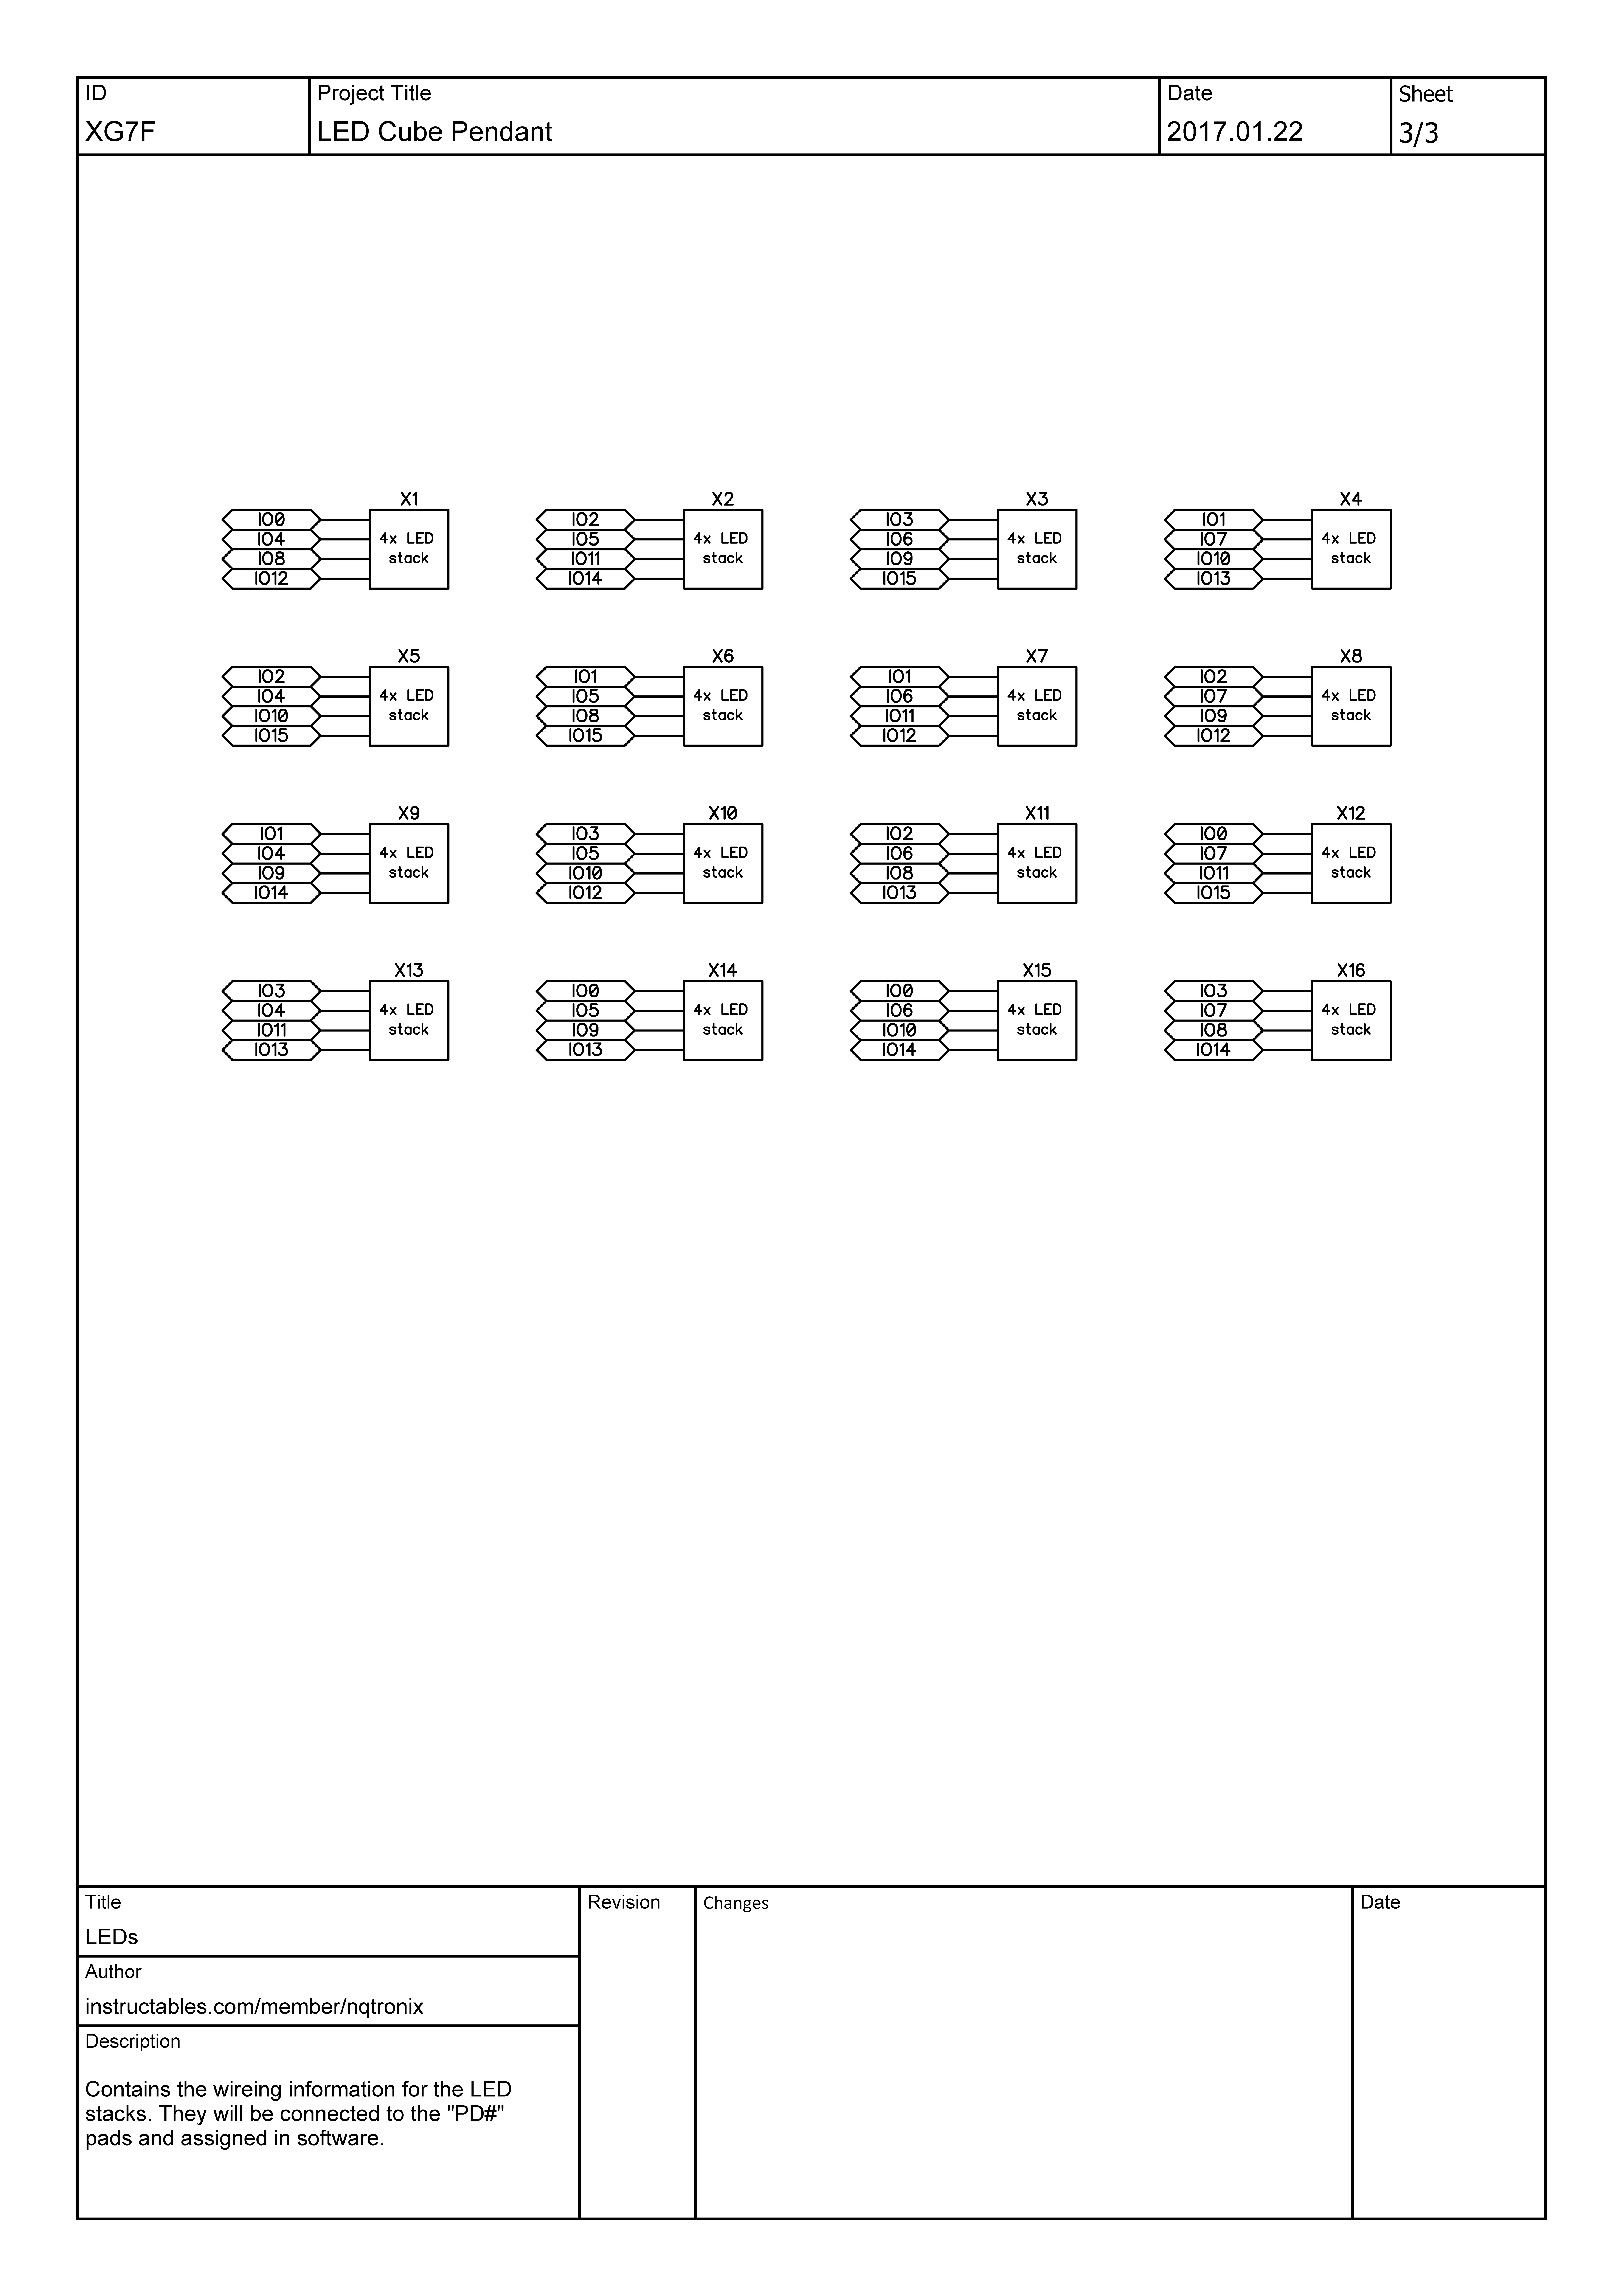 iGA.2.3 - schematic XG7F.png